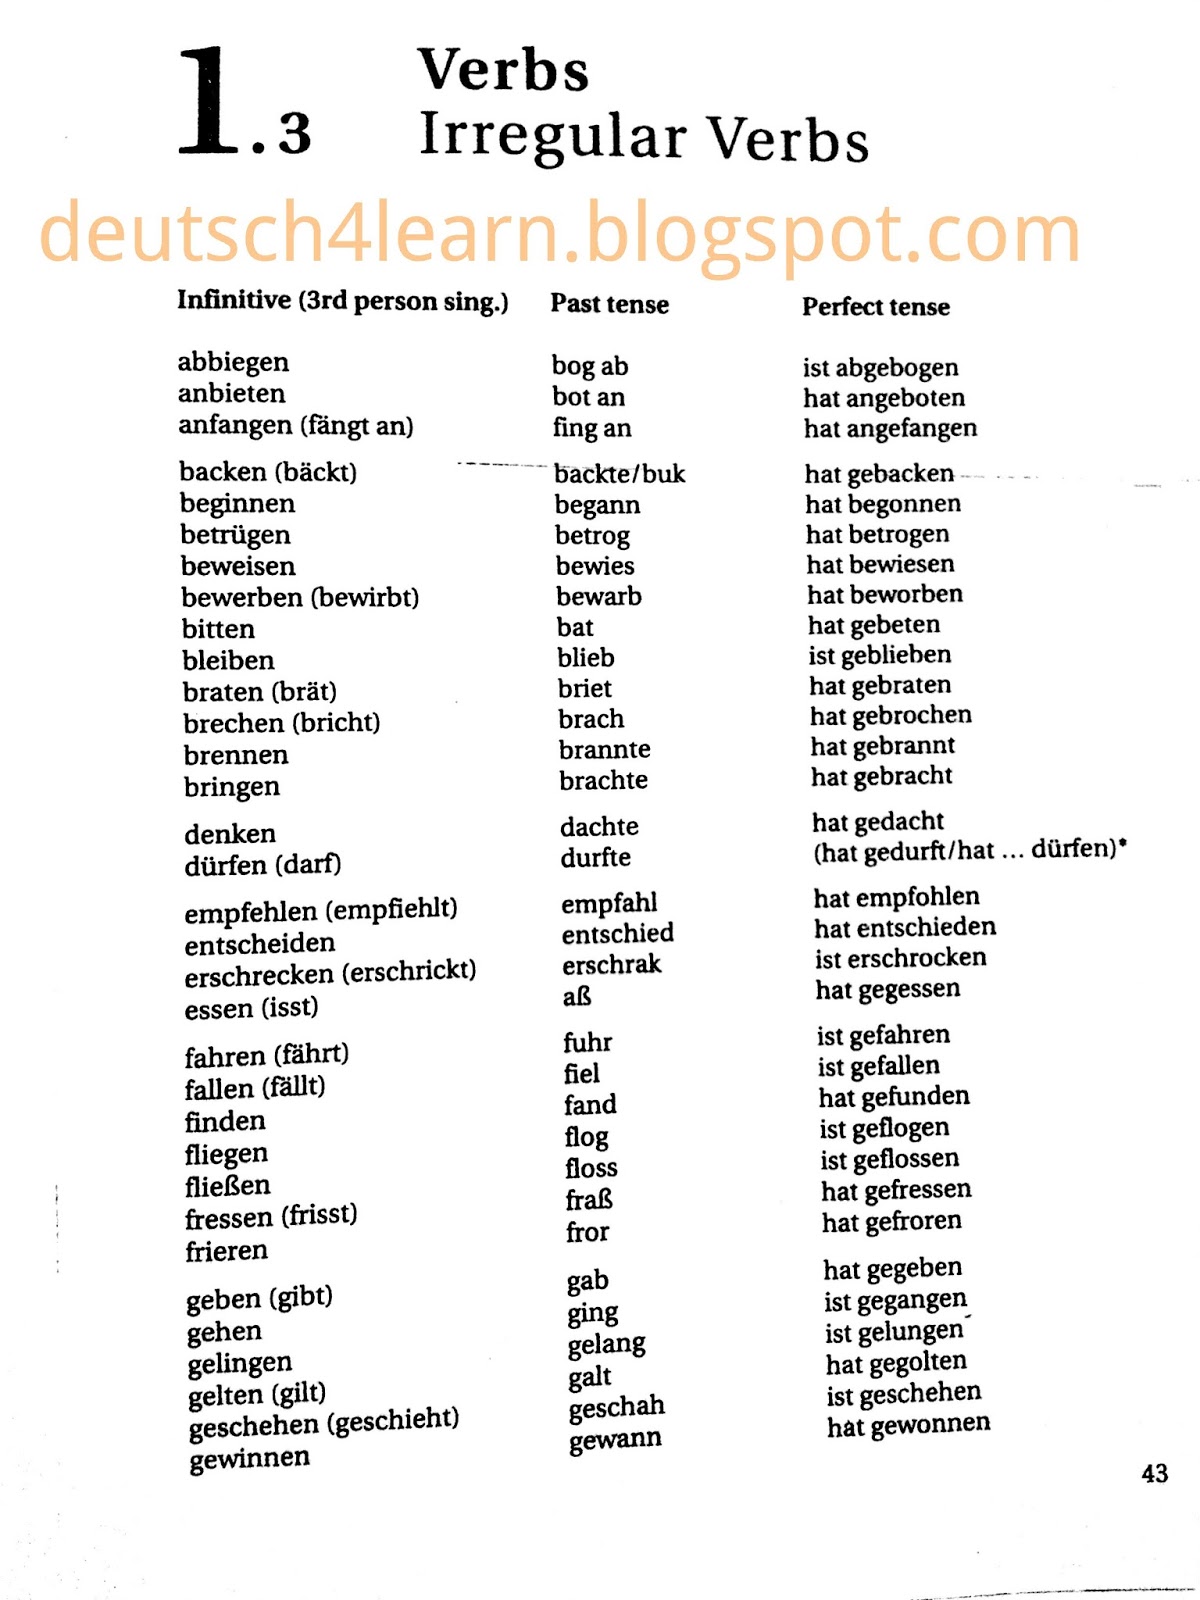 german-irregular-verbs